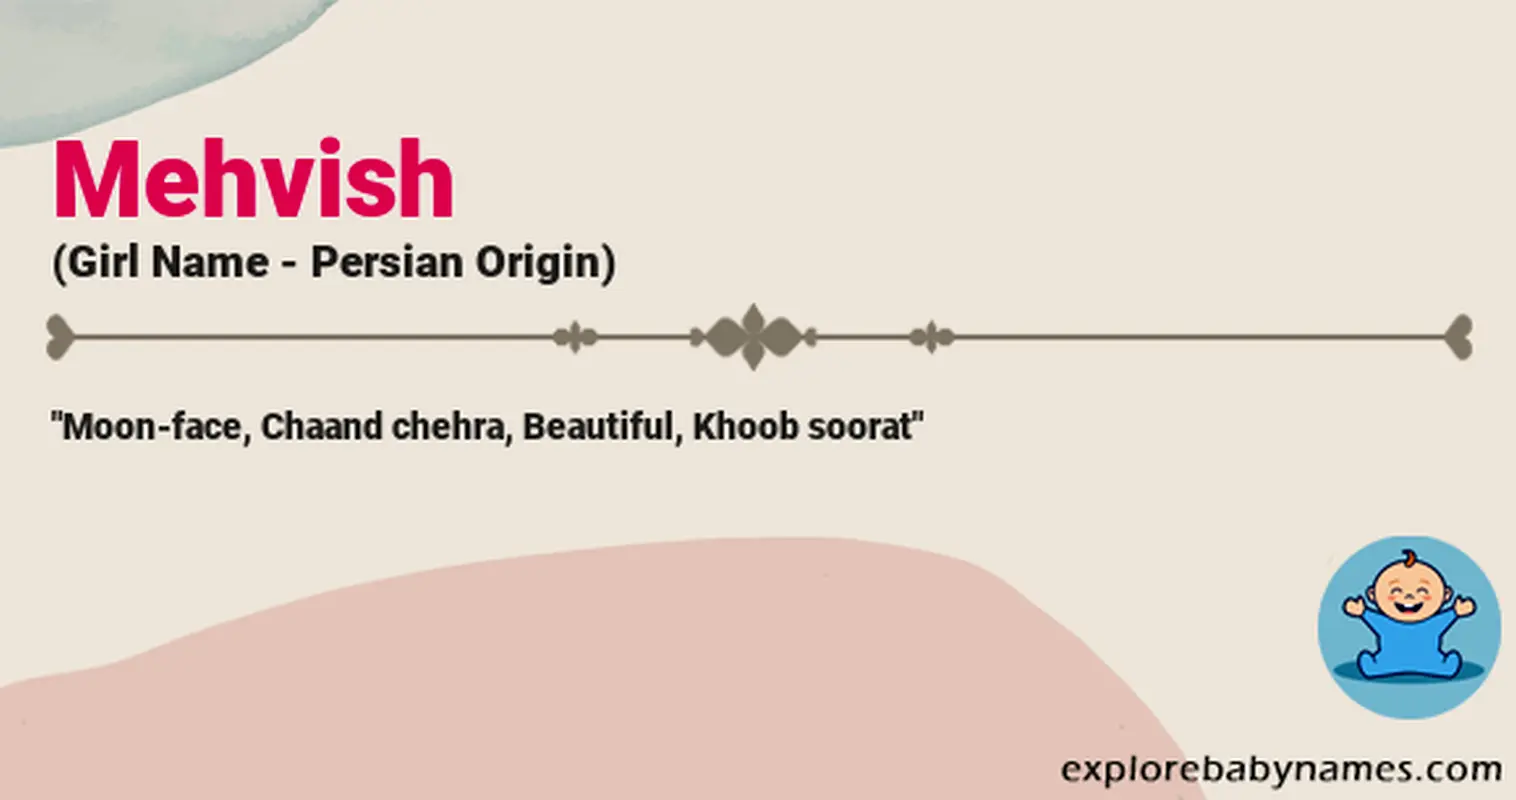 Meaning of Mehvish